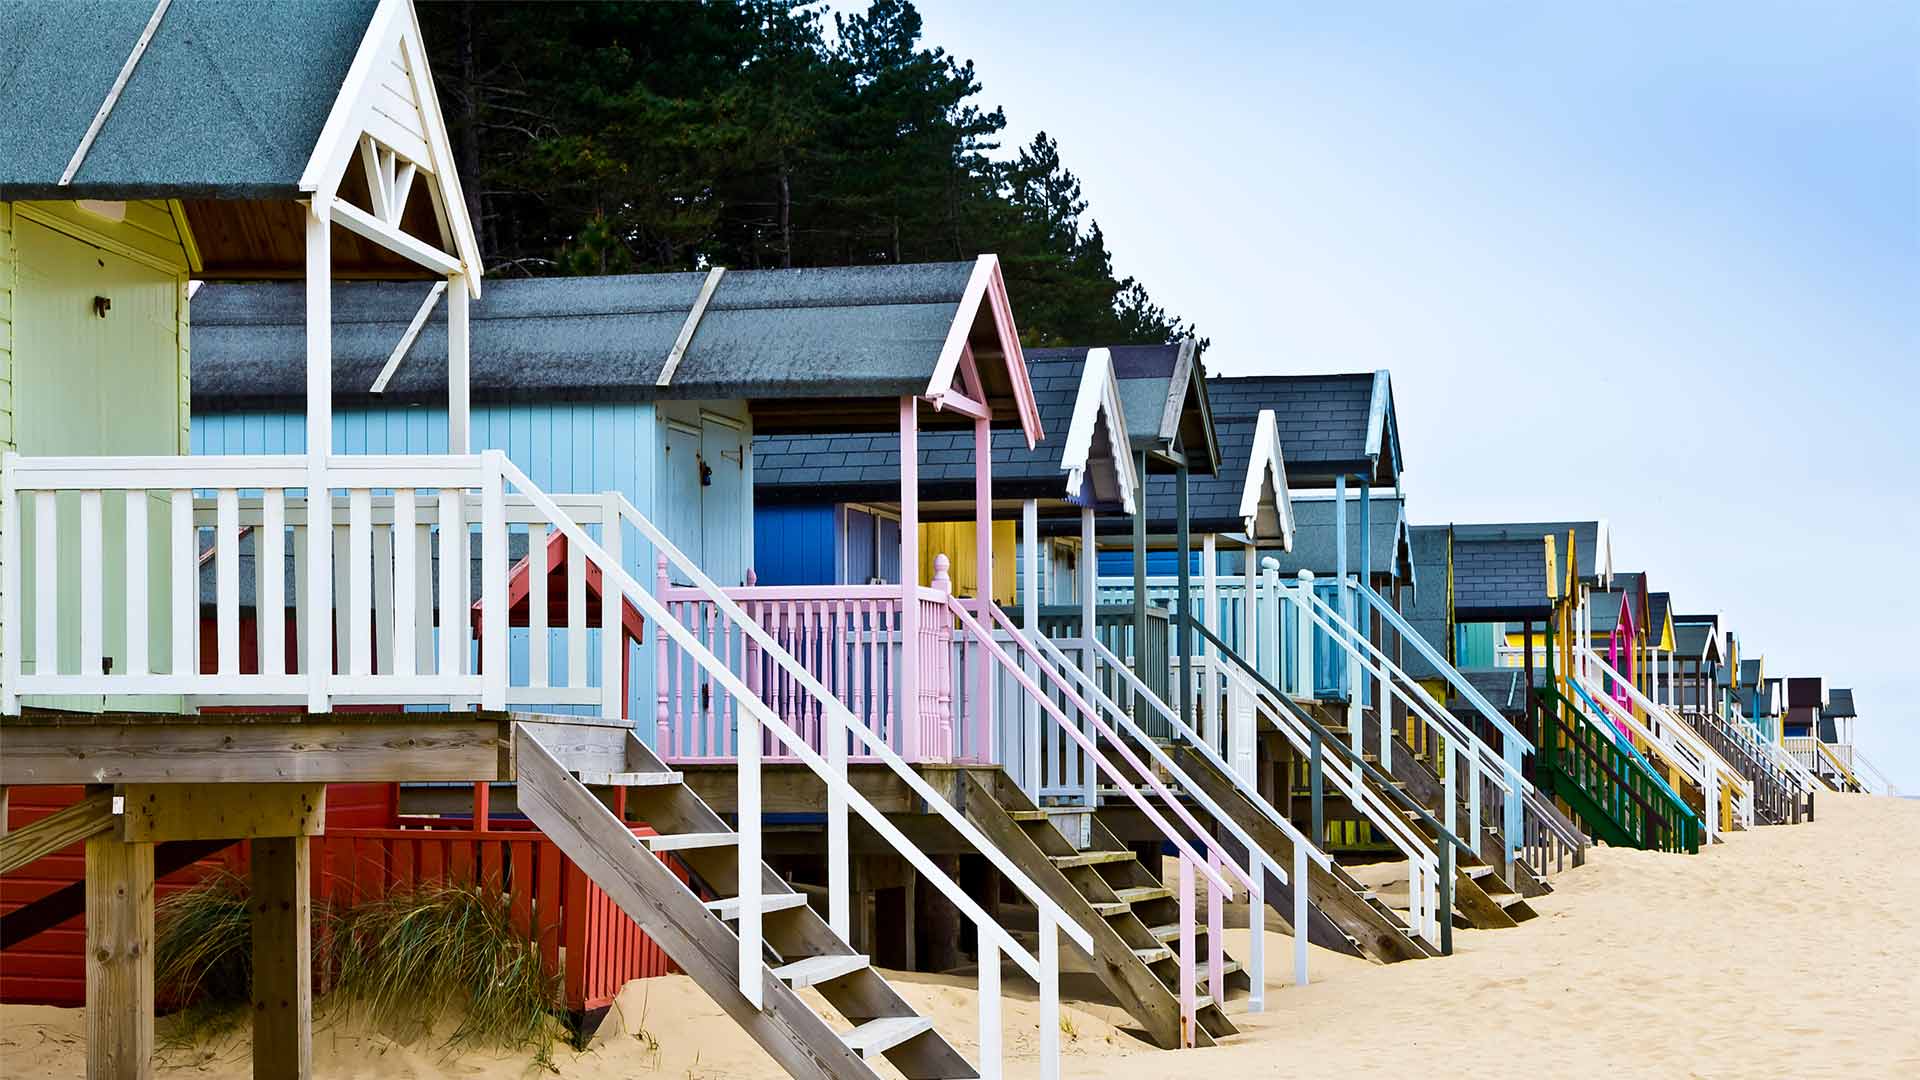 Colourful beachhuts on stilts